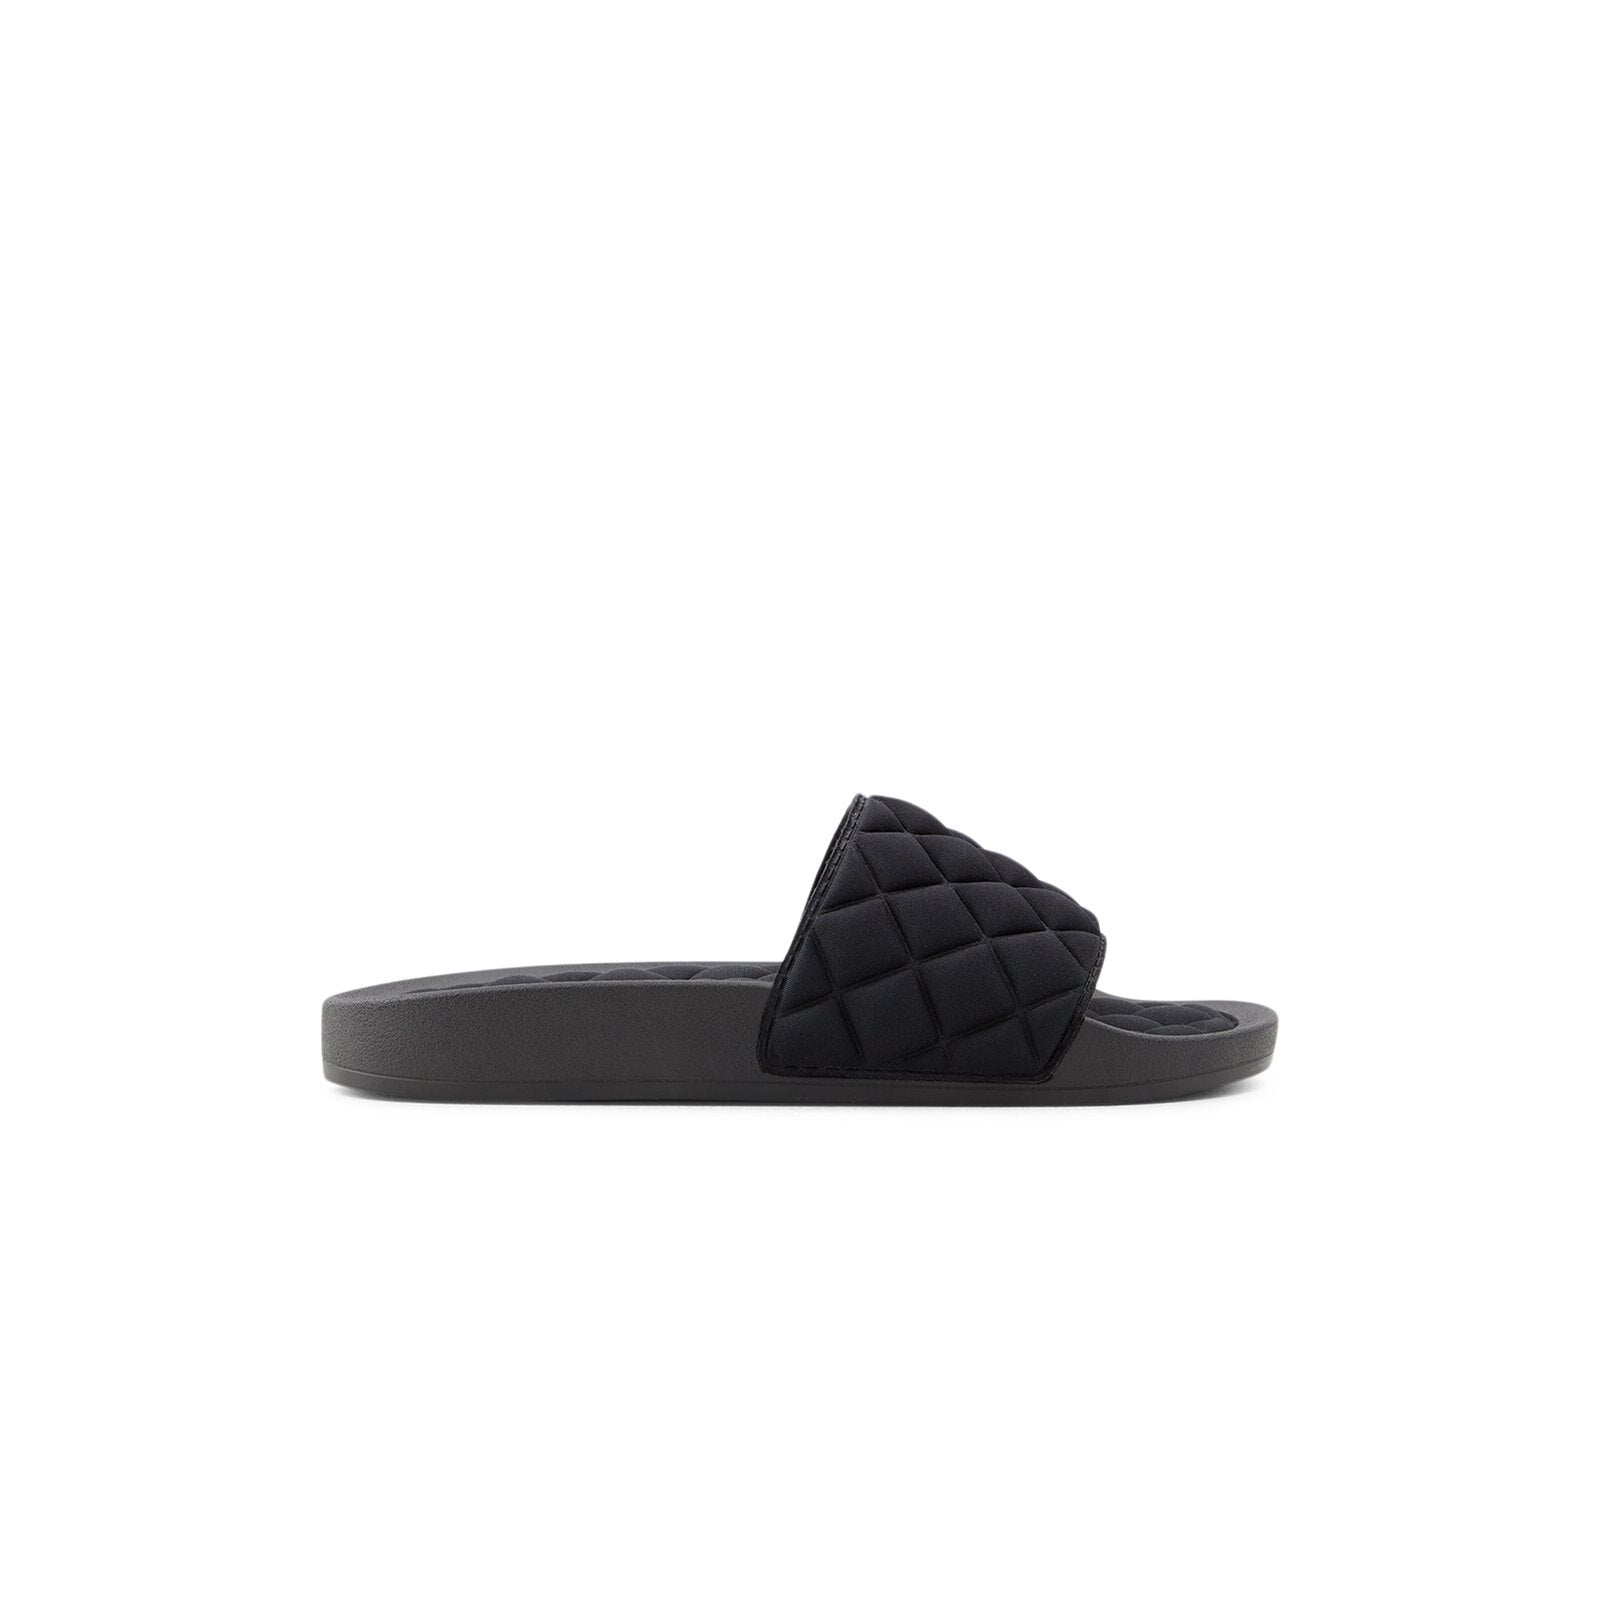 KAEANIELL Women Shoes - BLACK - CALL IT SPRING KSA